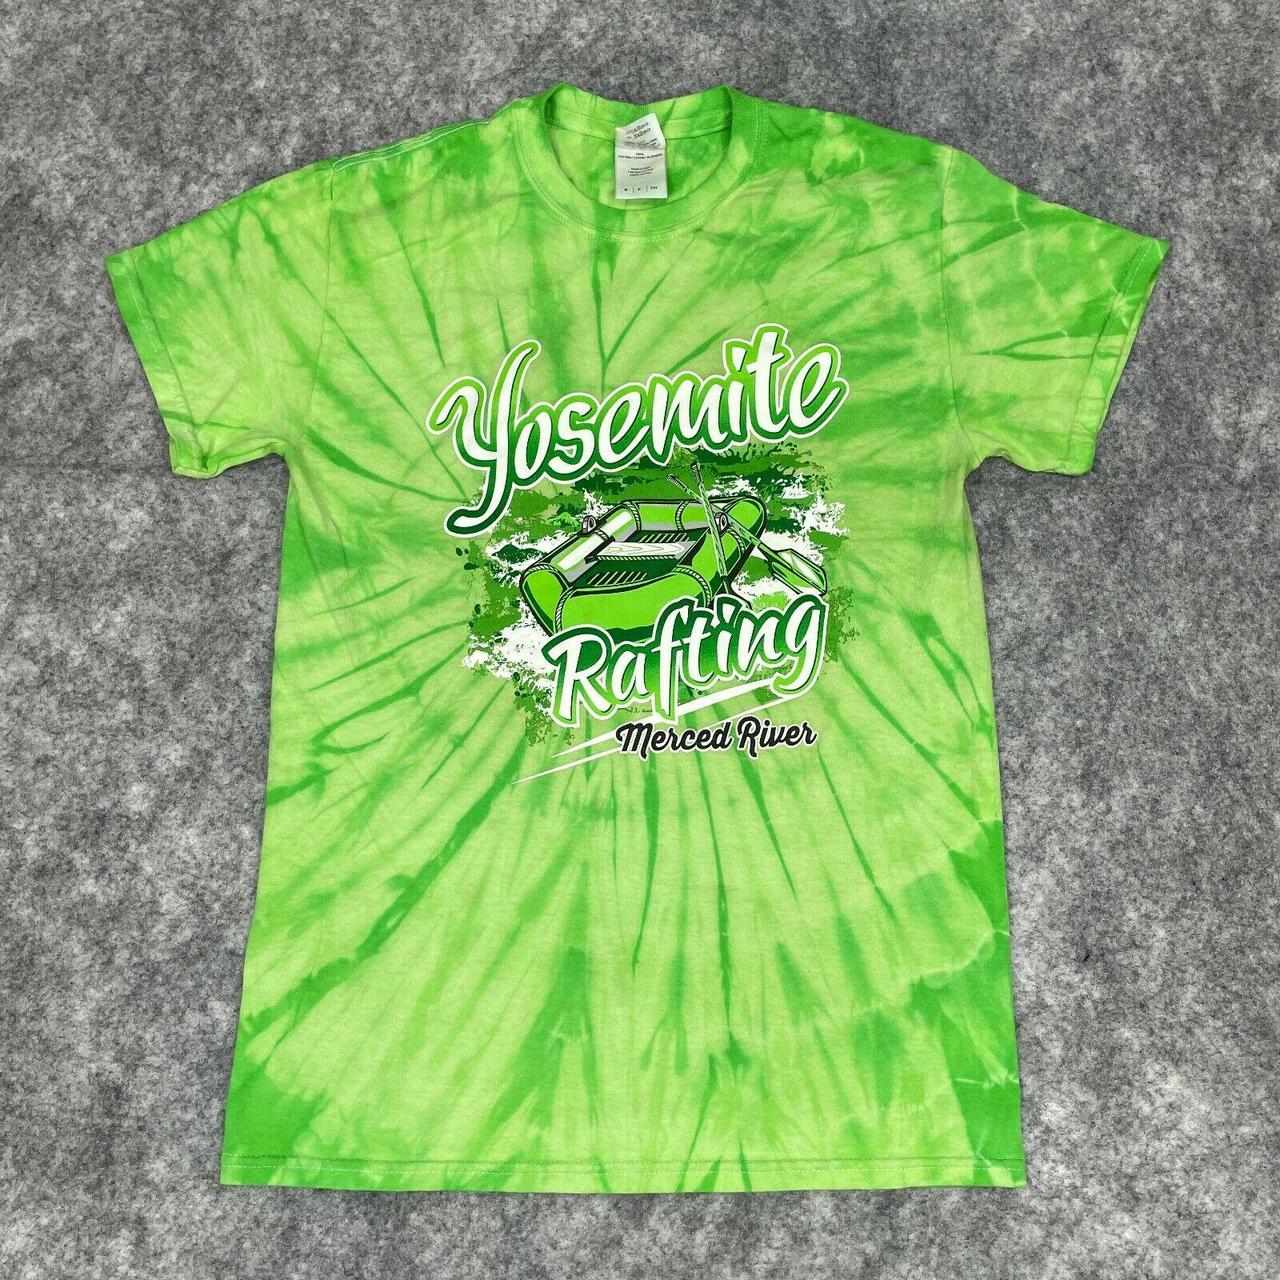 Product Image 2 - Yosemite Rafting Tie Dye T-Shirt